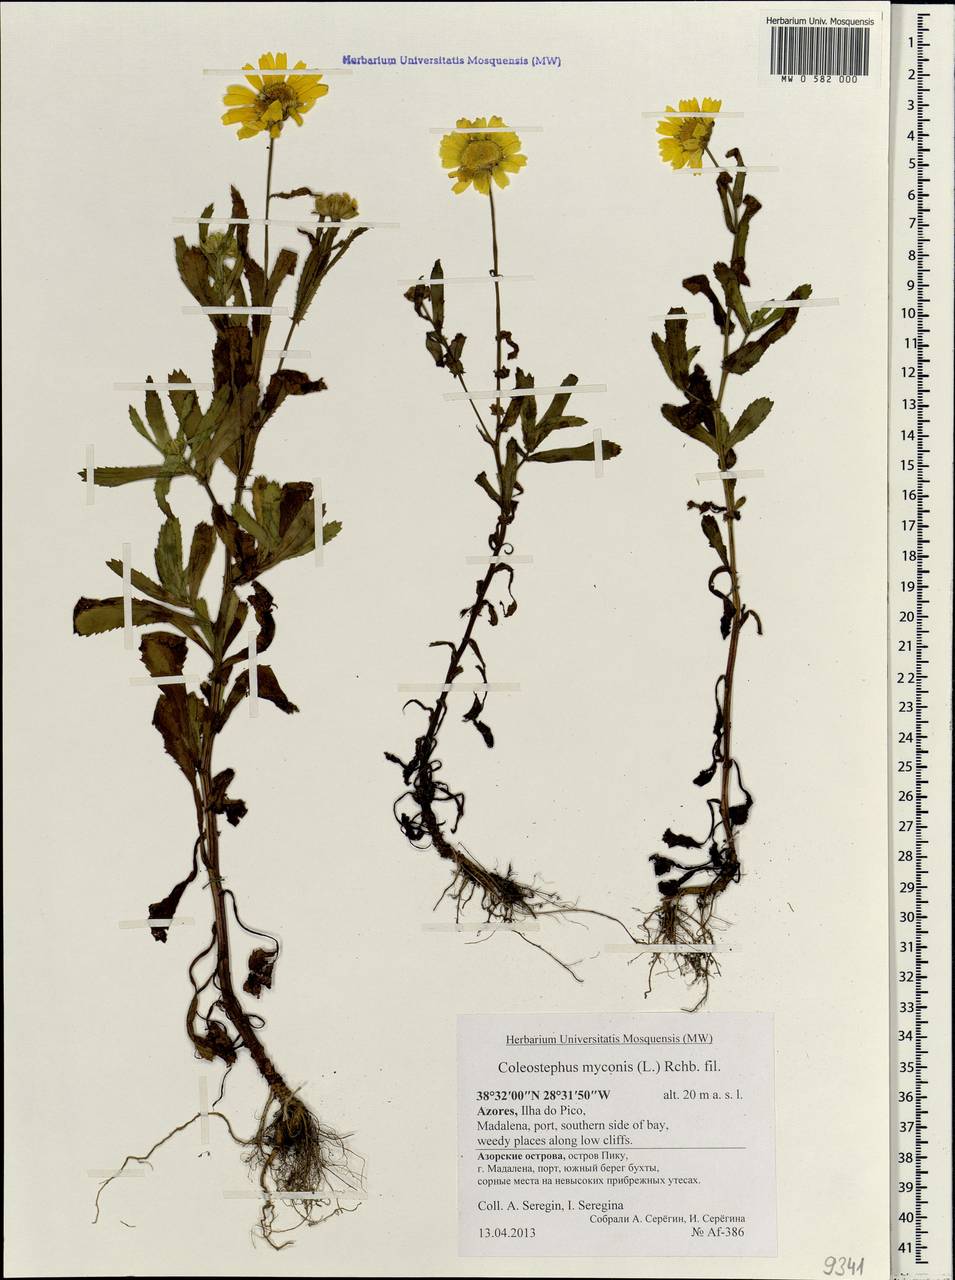 Coleostephus myconis (L.) Rchb.f., Африка (AFR) (Португалия)